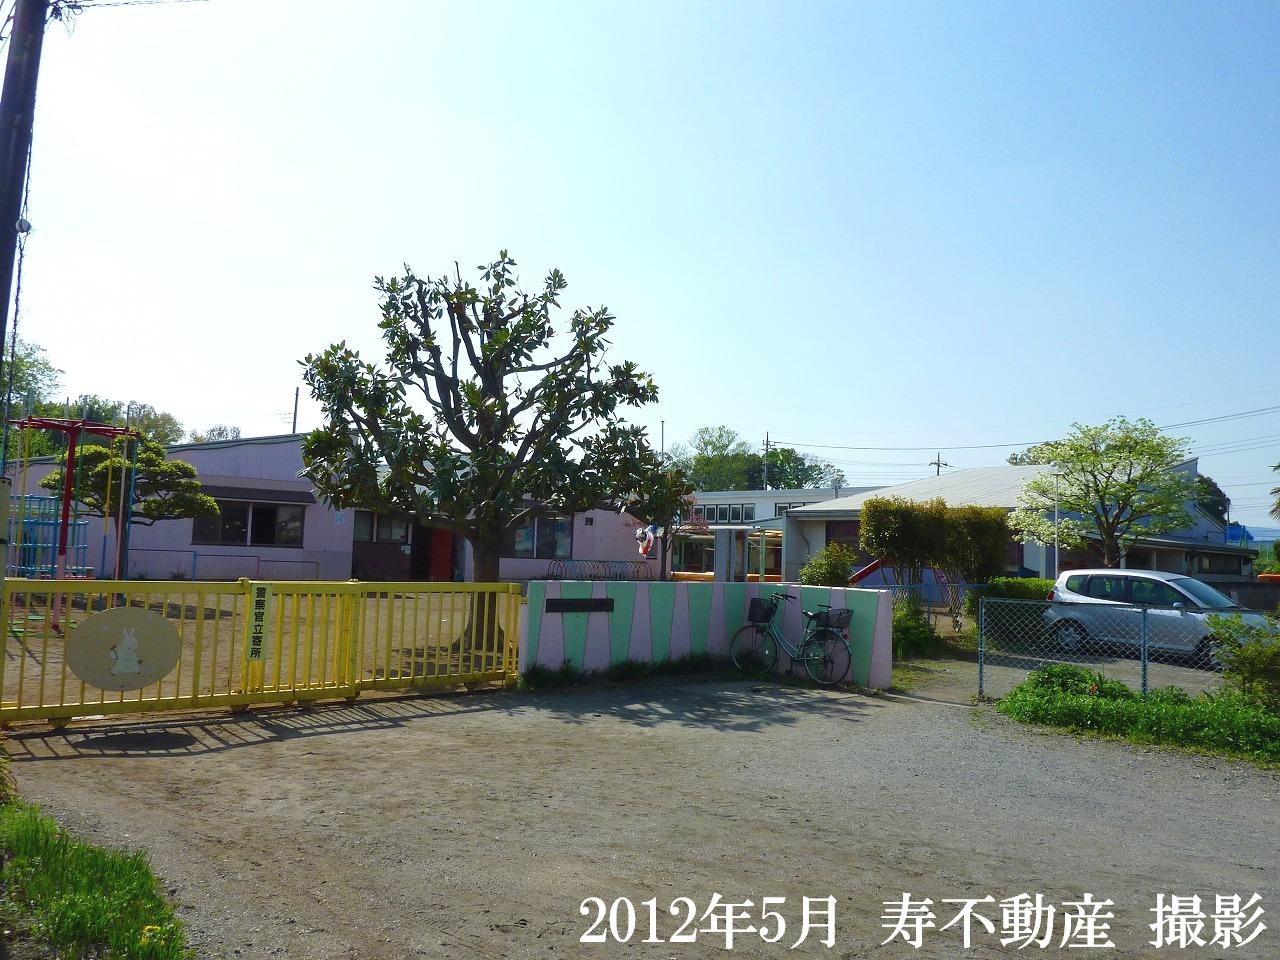 kindergarten ・ Nursery. Okegawa Hideya nursery school (kindergarten ・ 865m to the nursery)